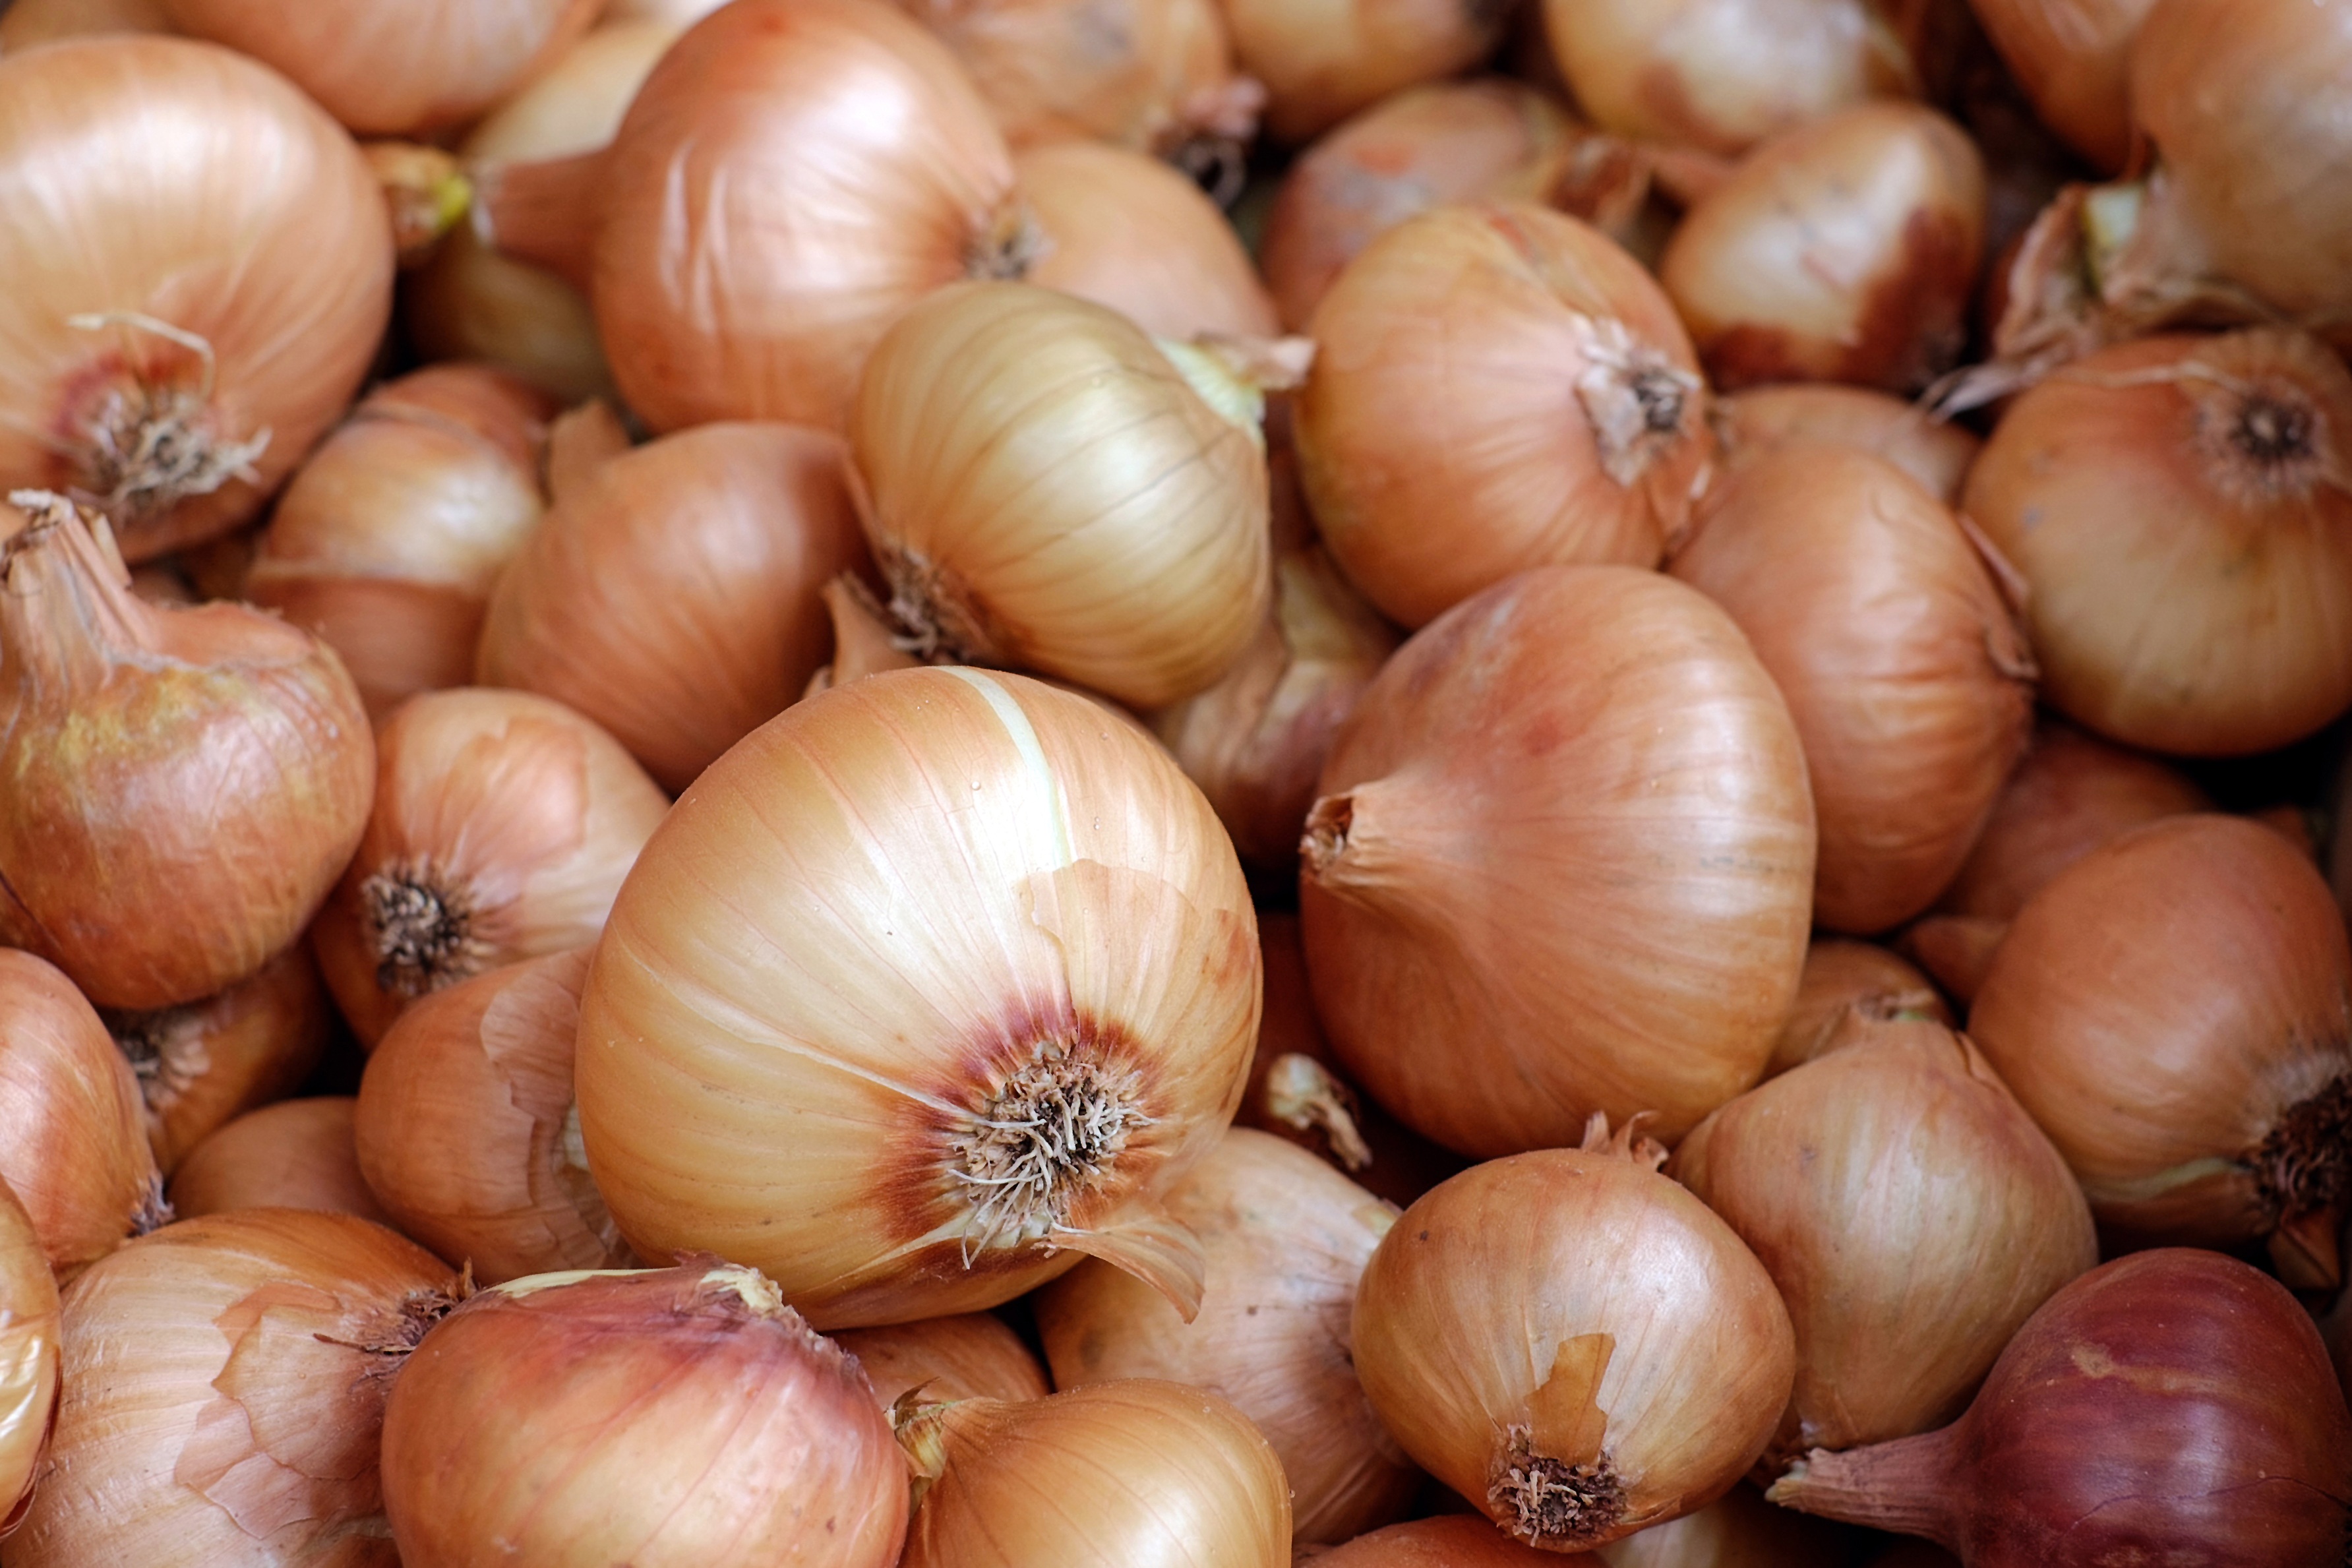 A bushel of yellow onions